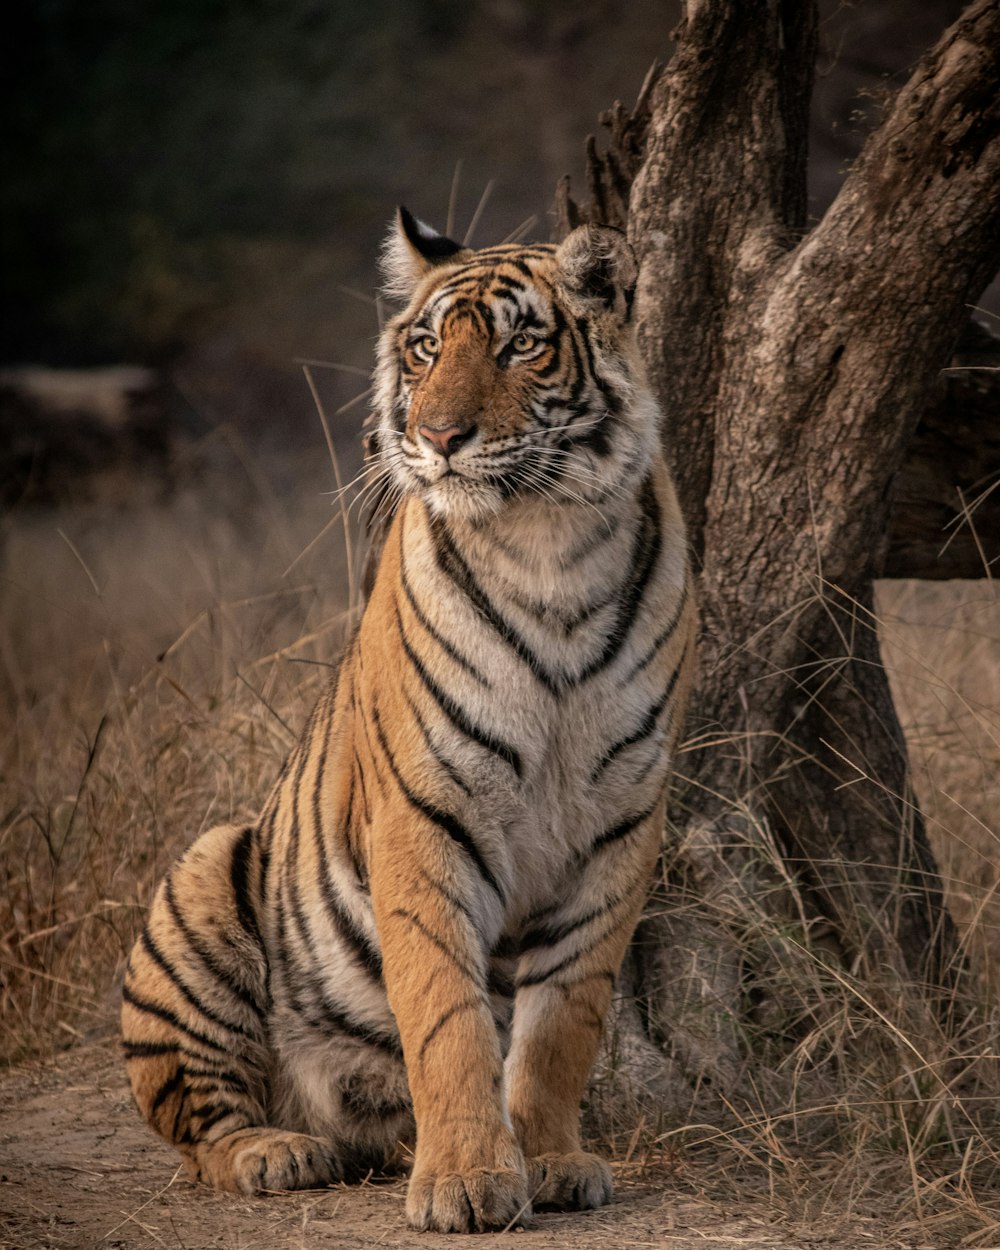 tigre na grama marrom durante o dia